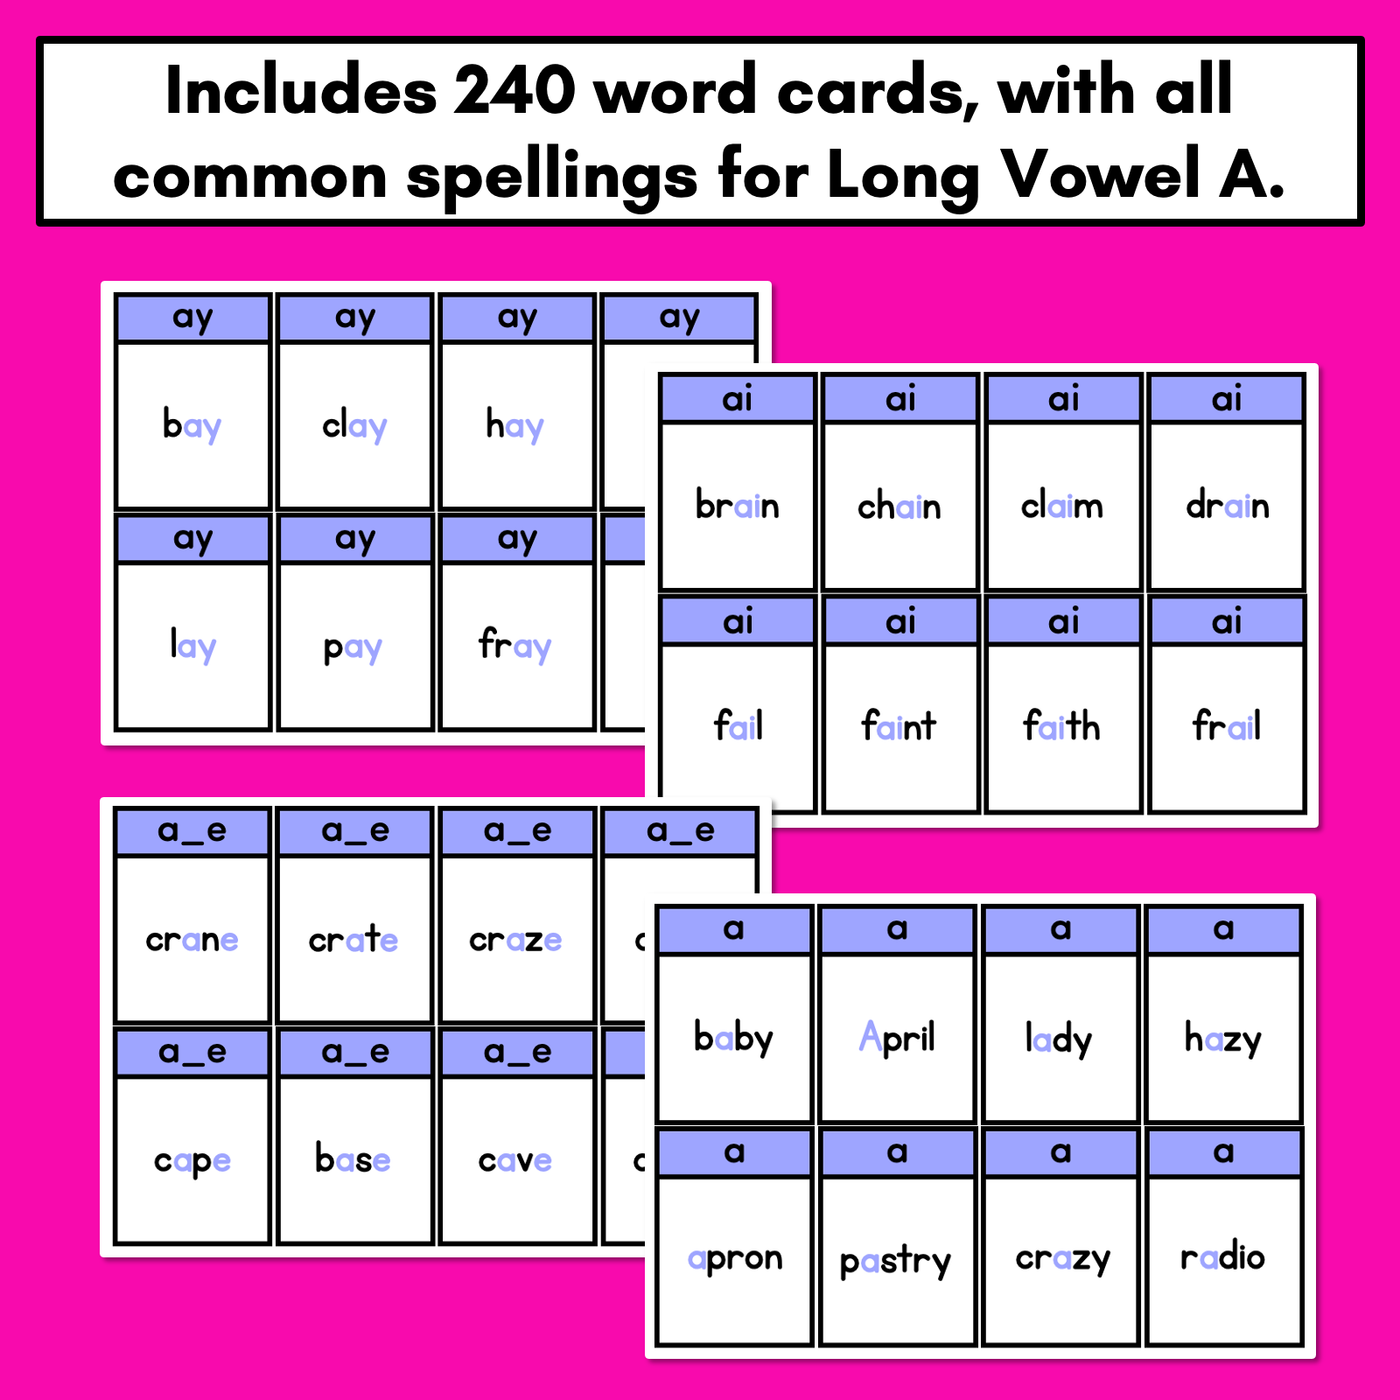 Long Vowel A Card Game - Phonics Flip for Long Vowel Sounds